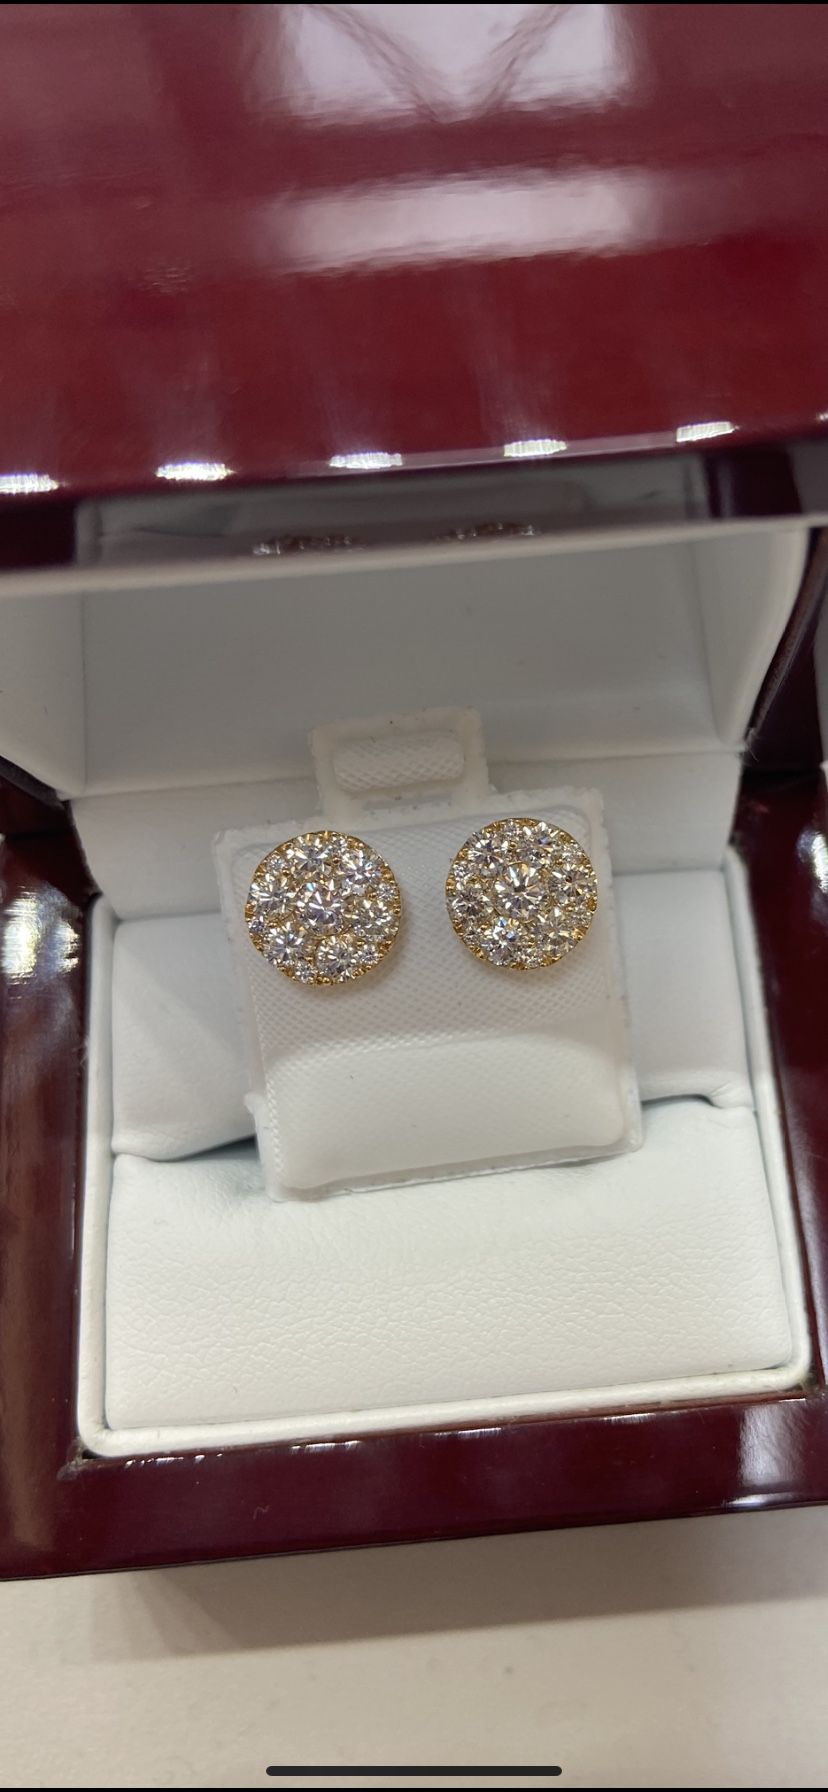 10k gold VVS quality REAL diamond earrings 1.55 ctw